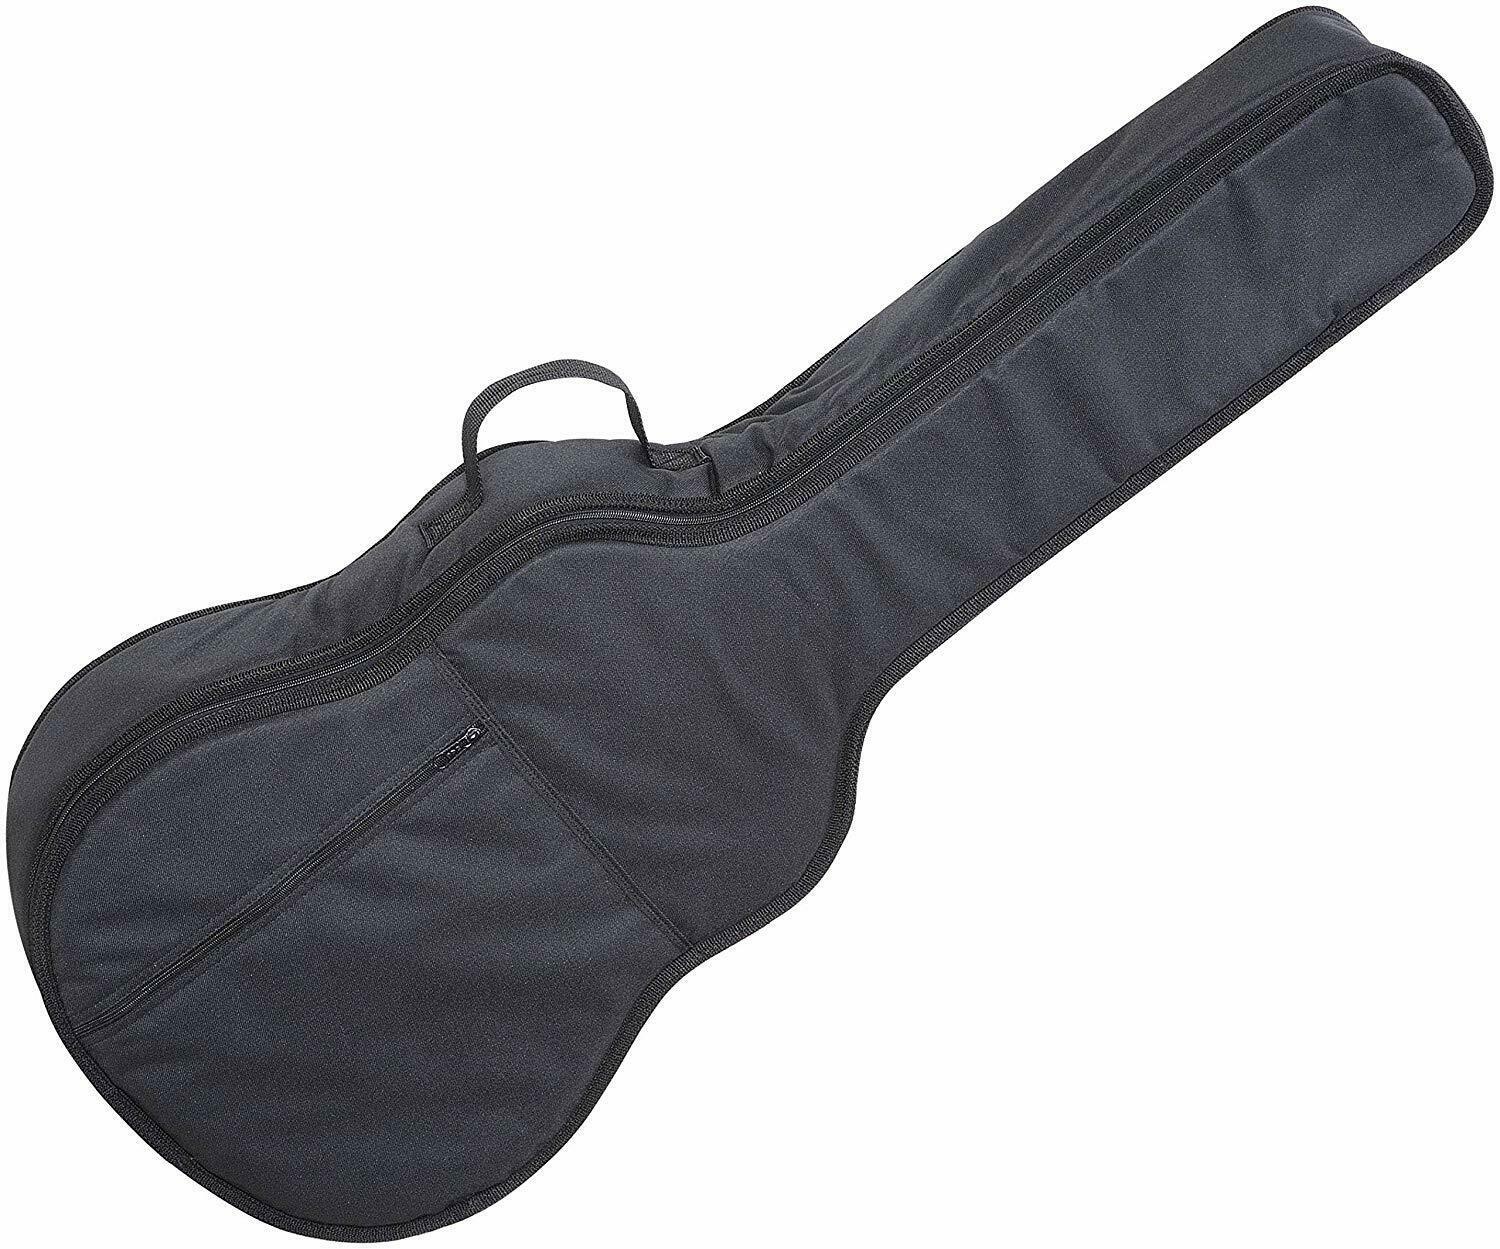 Levy's - EM20C - Classical Standard Guitar Gig Bag - Black - $47.95